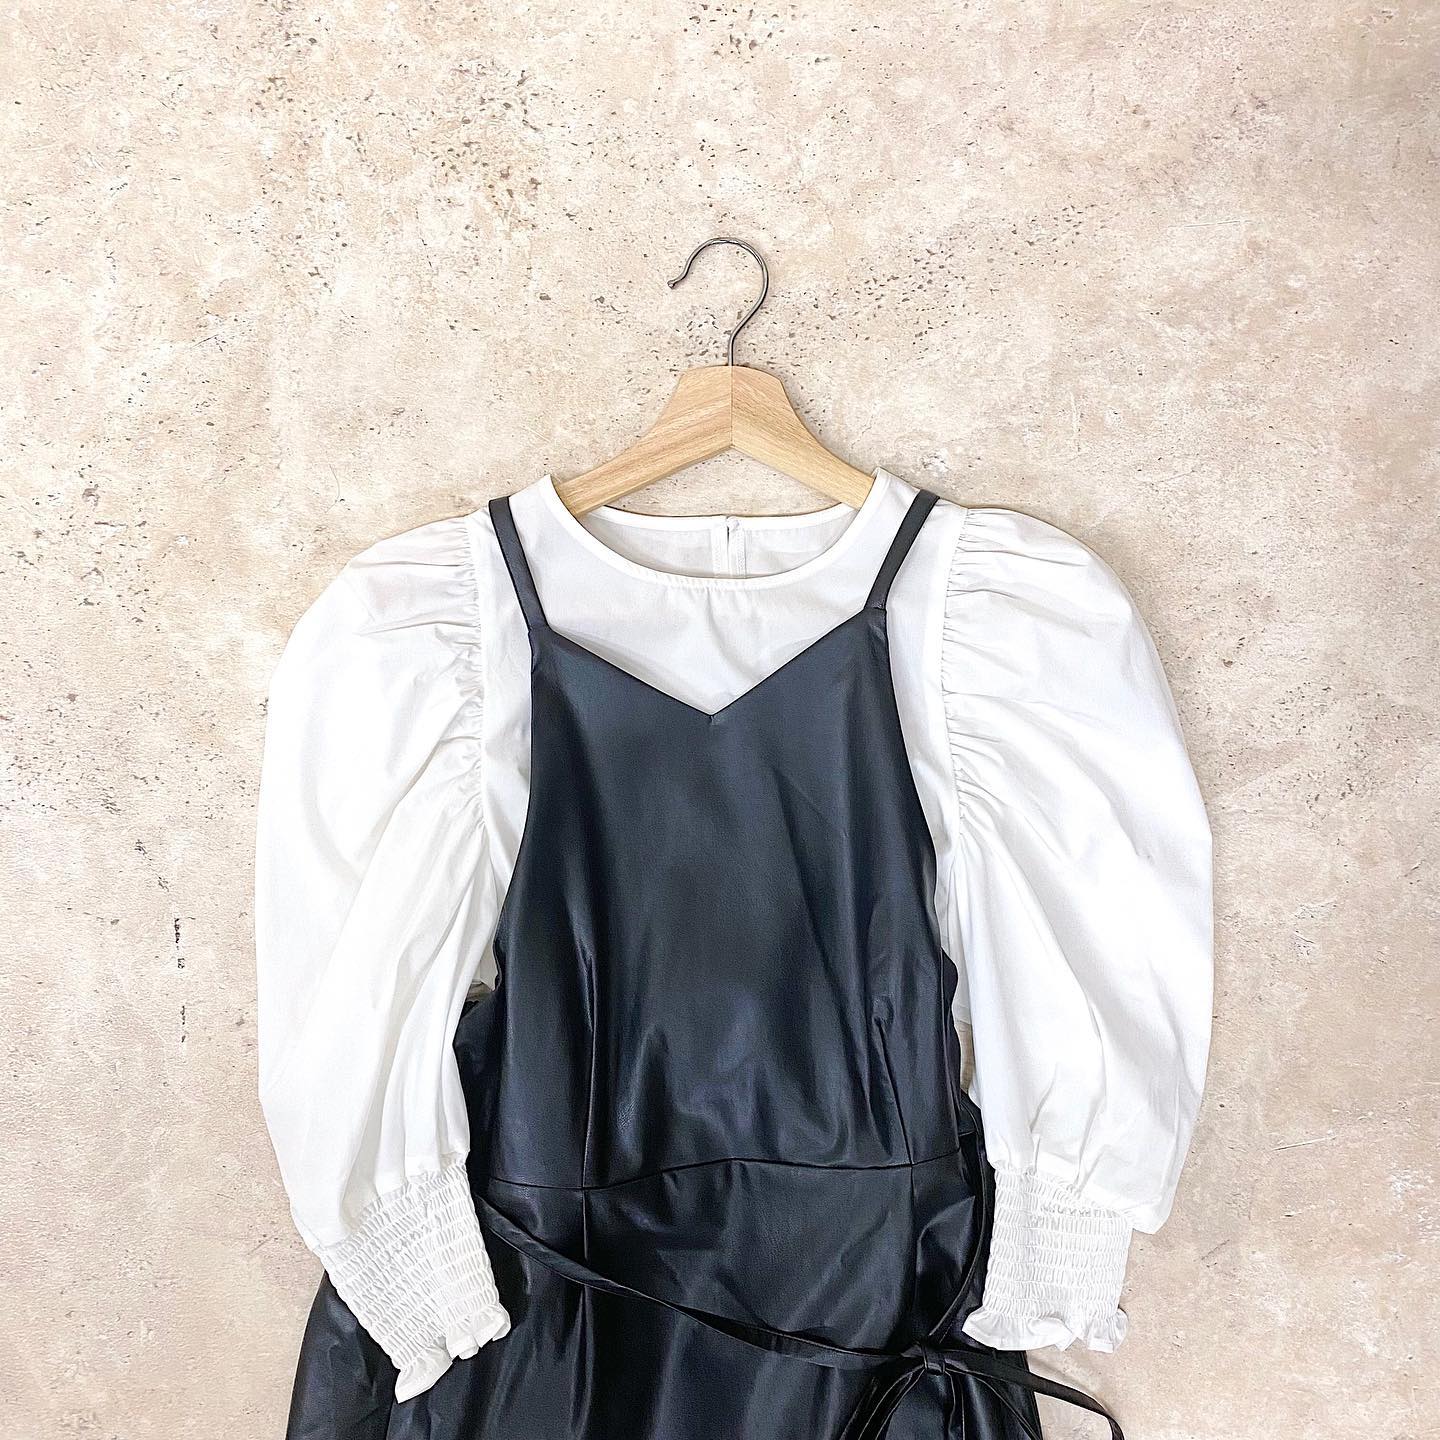 .﻿﻿﻿︎leather like cami-dress﻿ ¥6,820﻿﻿﻿︎puff sleeve blouse﻿ ¥3,850﻿﻿﻿﻿﻿﻿﻿﻿#ur_melty #ユアメルティ﻿#blouse #puffsleeve #パフスリーブブラウス﻿#パフスリーブブラウスコーデ #ブラウスコーデ﻿#レザーキャミワンピース #キャミワンピ﻿#パールロングネックレス#春コーデ #韓国ファッション #韓国風﻿#오오티디 #데일리룩 #패션 #패션스타그램 #옷스타그램﻿#일본패션 #유아멜티 #코디 #코디스타그램